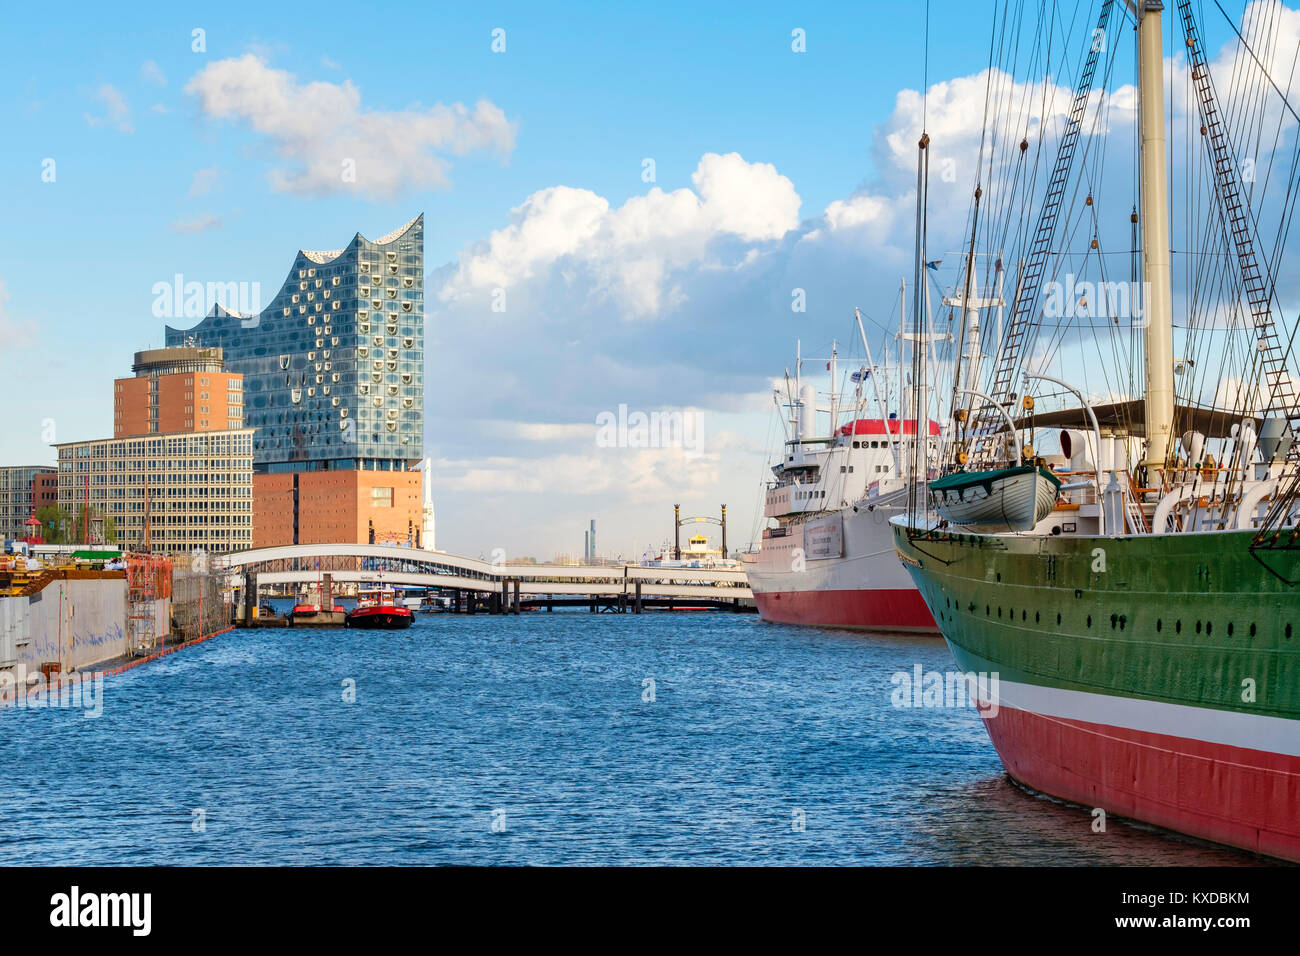 Elbphilharmonie (Elbe Philharmonic Hall) and historic Rickmer Rickmers sailing ship on Elbe River, St. Pauli, Hamburg, Germany Stock Photo